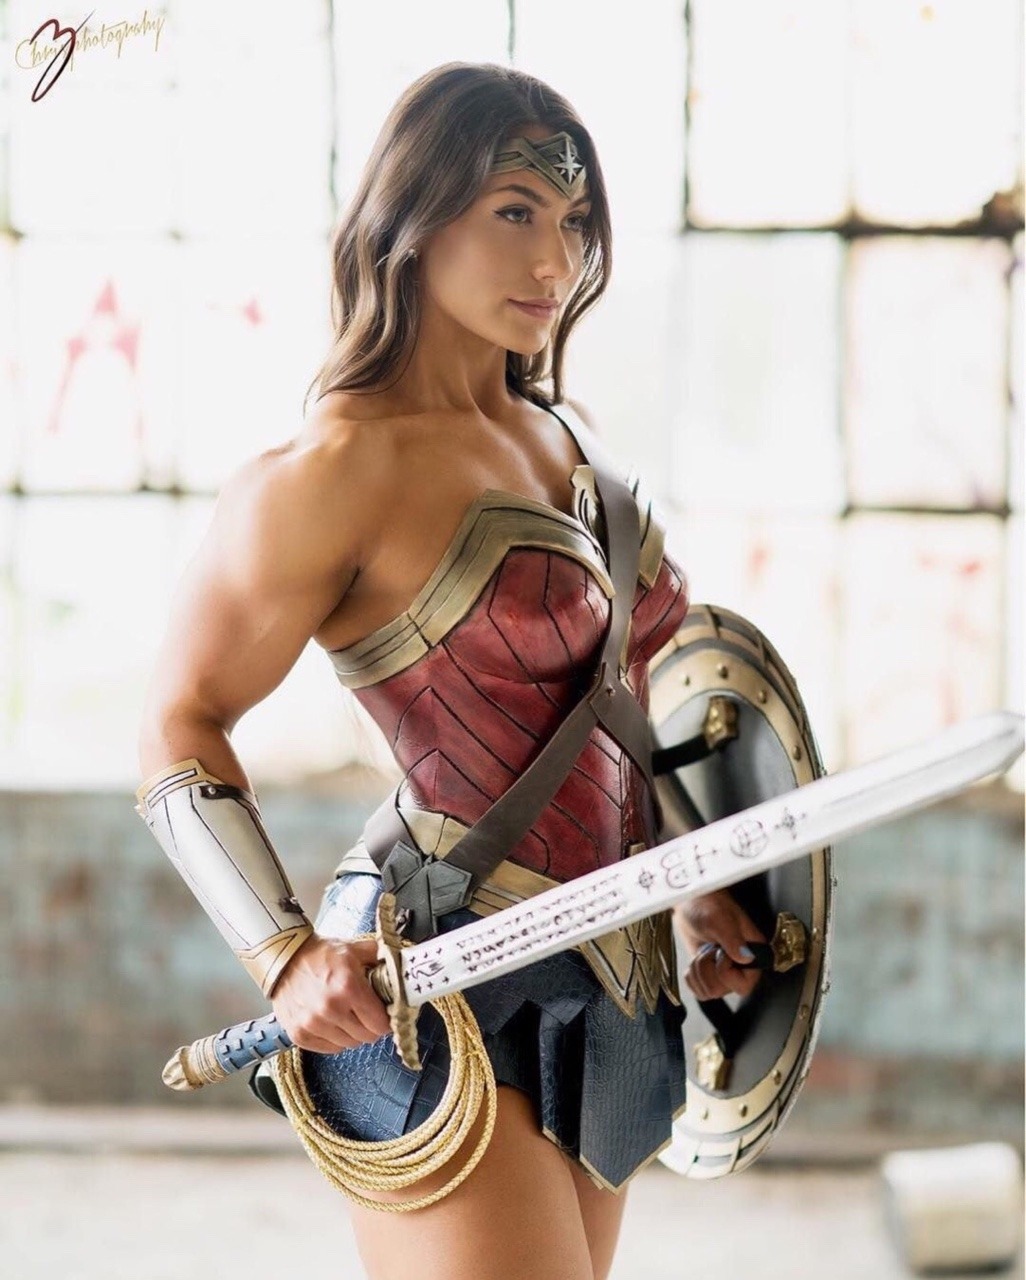 Flexingtyger99 Bridgette Goudz As Wonder Woman